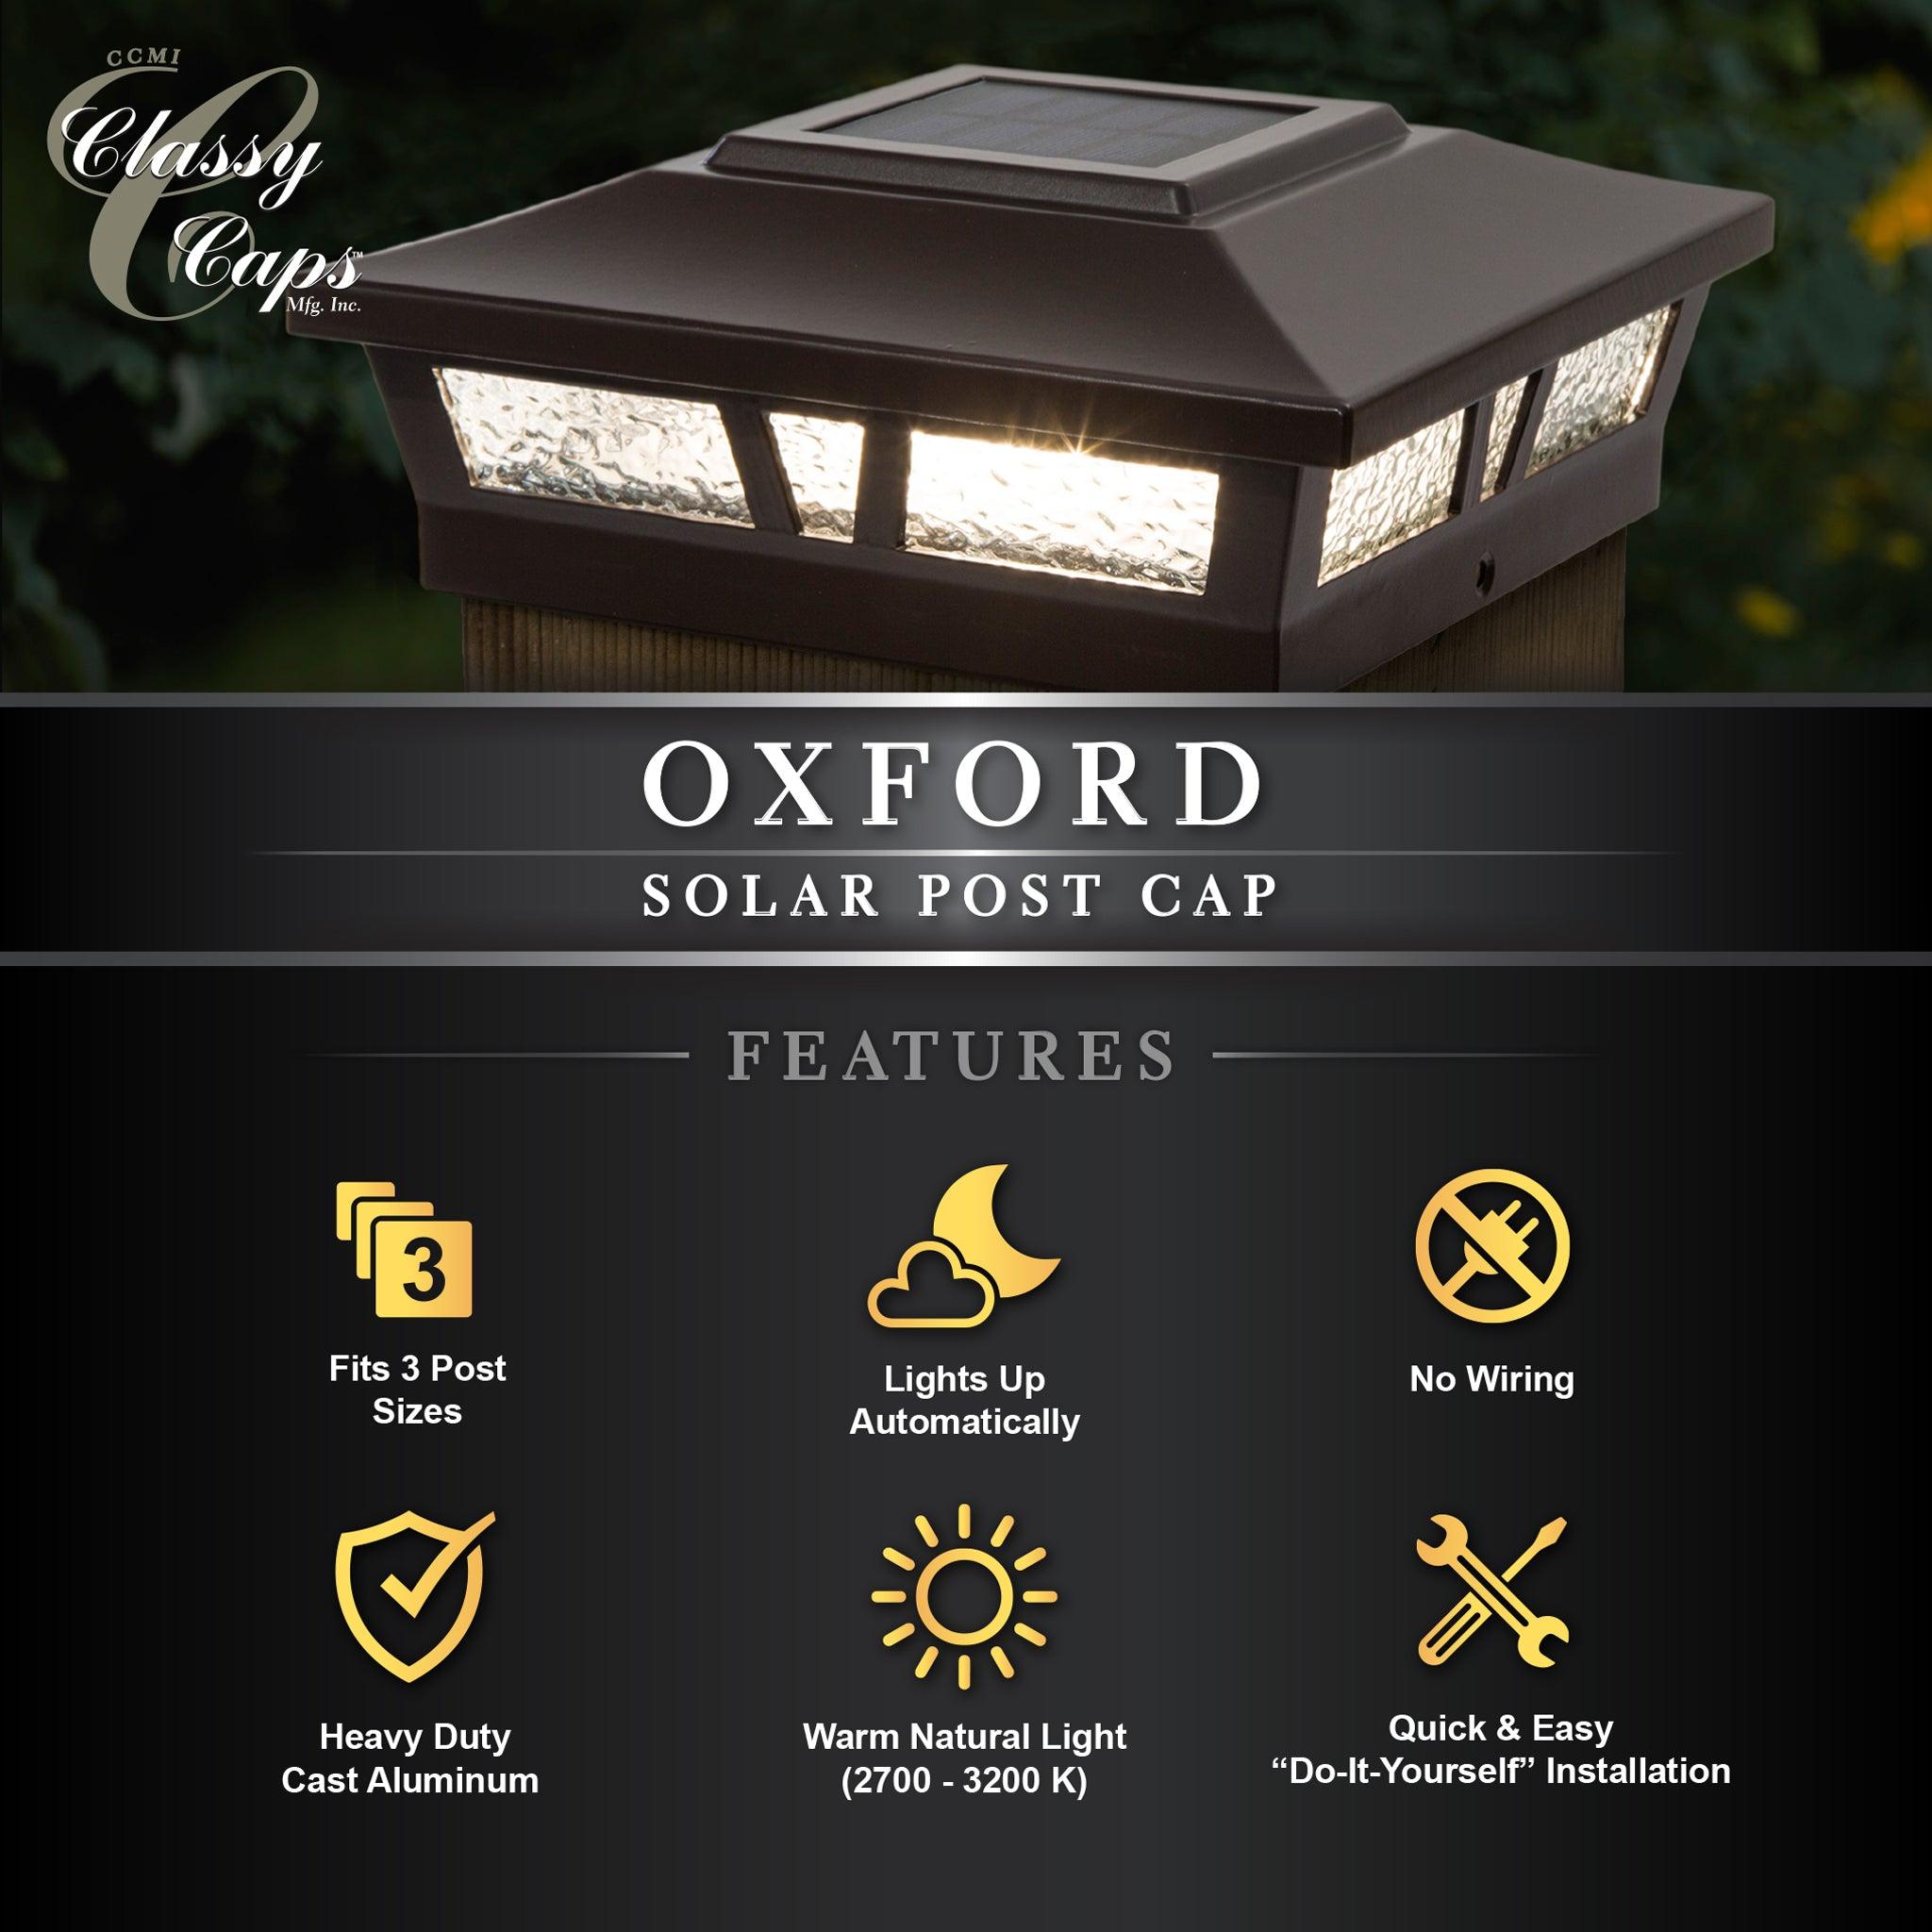 Oxford Solar Post Cap - Brown - Classy Caps Mfg. Inc.